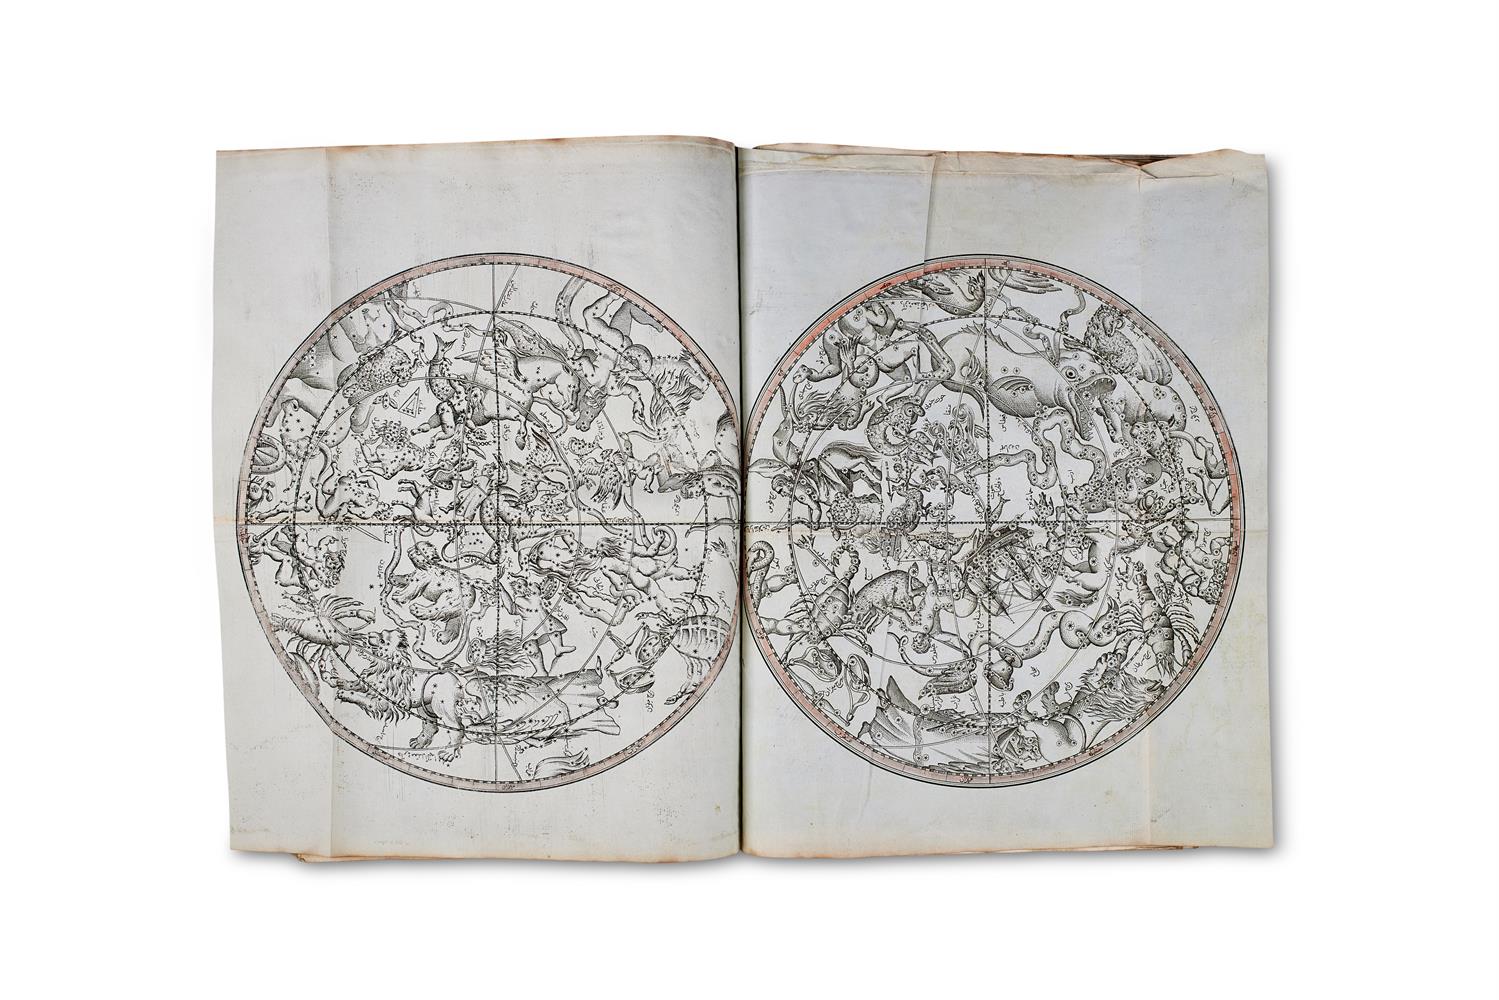 Ɵ OTTOMAN ATLAS: RAIF EFENDI, MAHMUD. CONSTANTINOPLE, 1218 AH (APRIL 1803-MARCH 1804) - Image 3 of 5